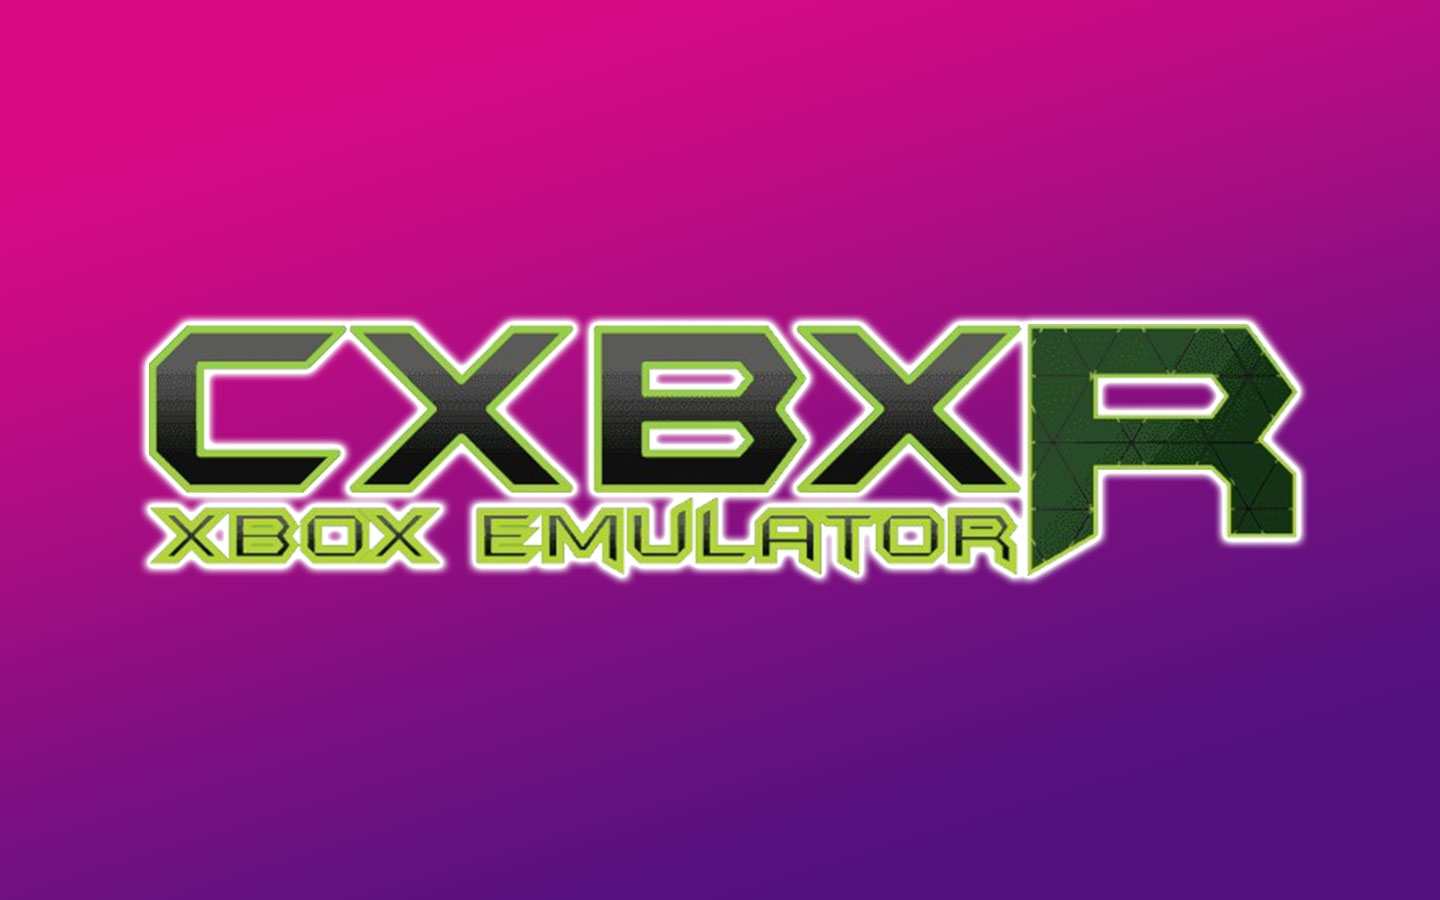 Xbox One Emulator PC CXBX